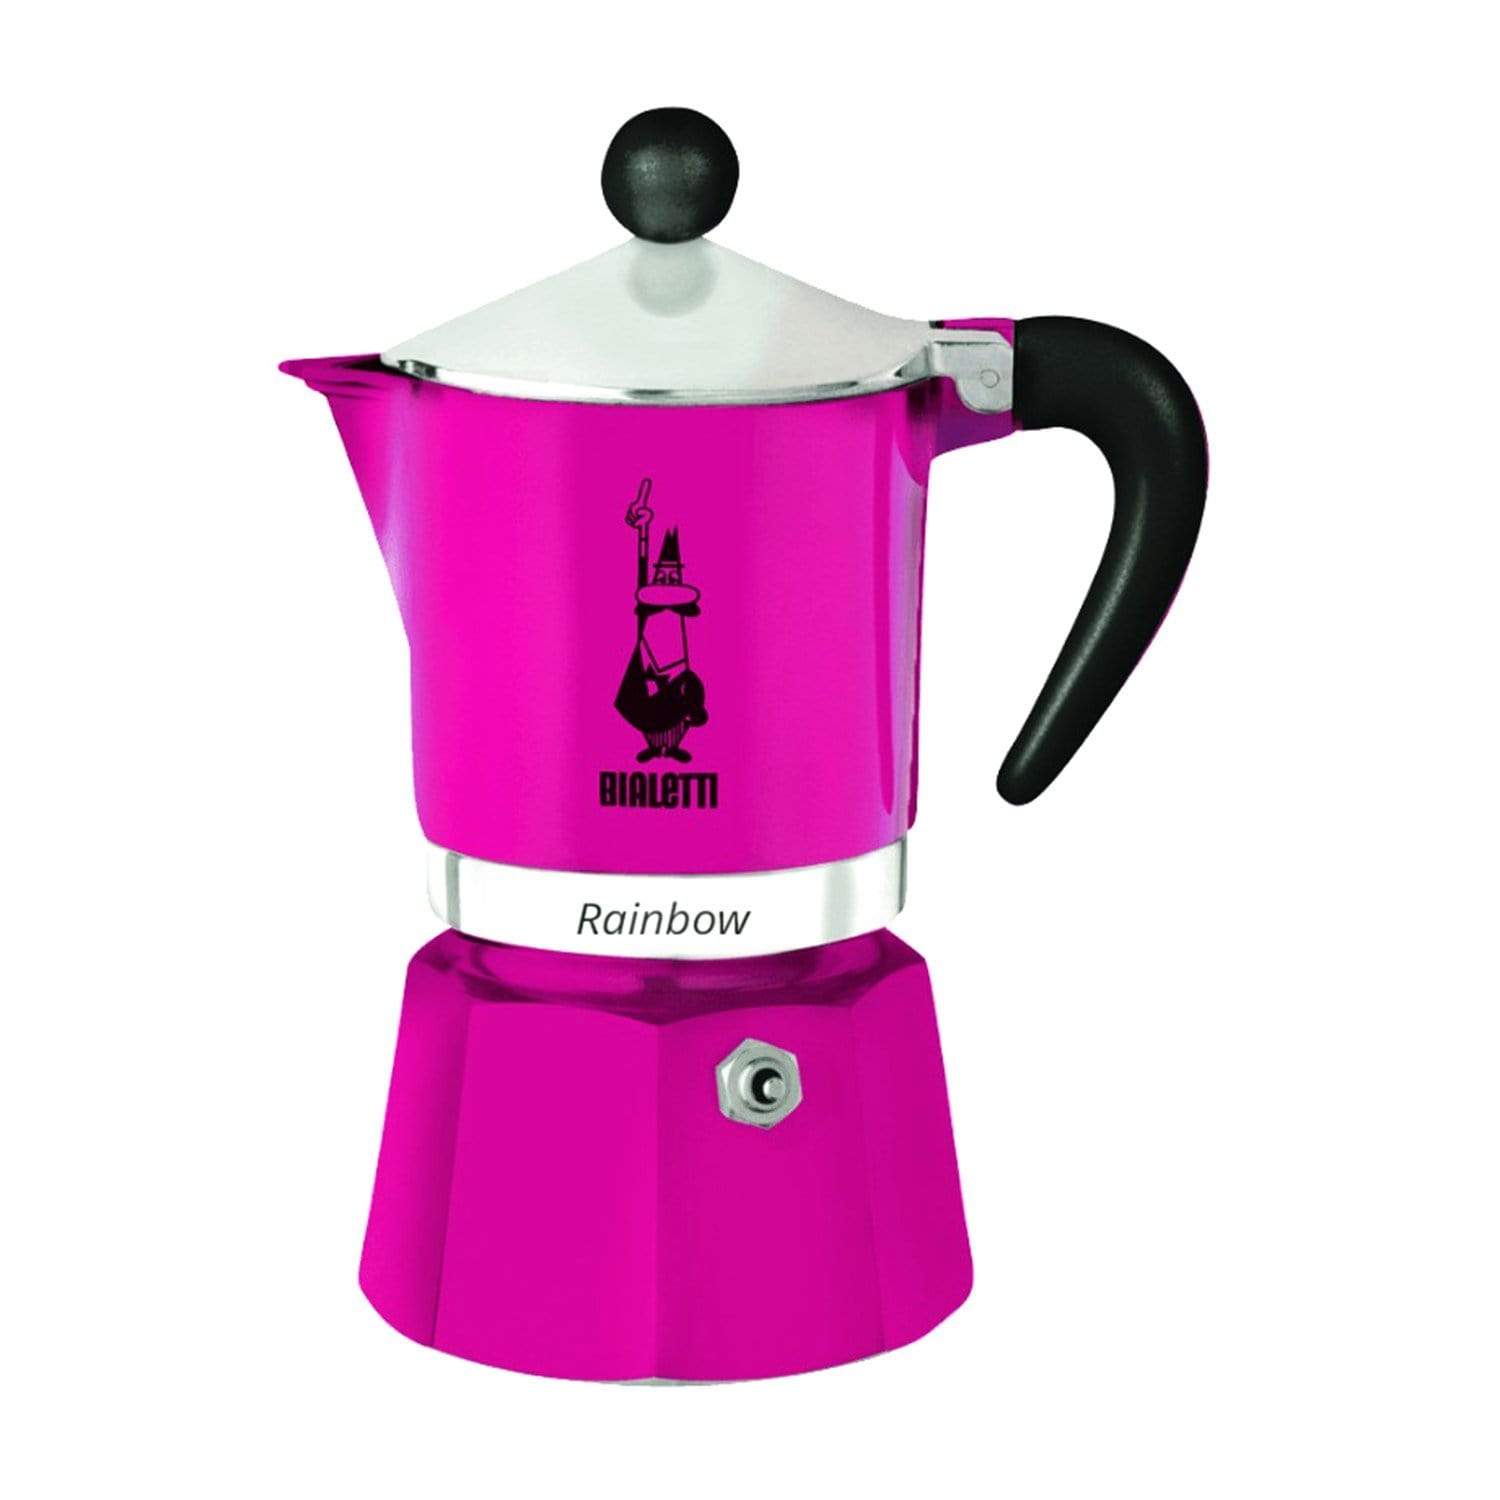 Bialetti Rainbow Coffee Maker - Fuchsia, 6 Cups - 5013 - Jashanmal Home